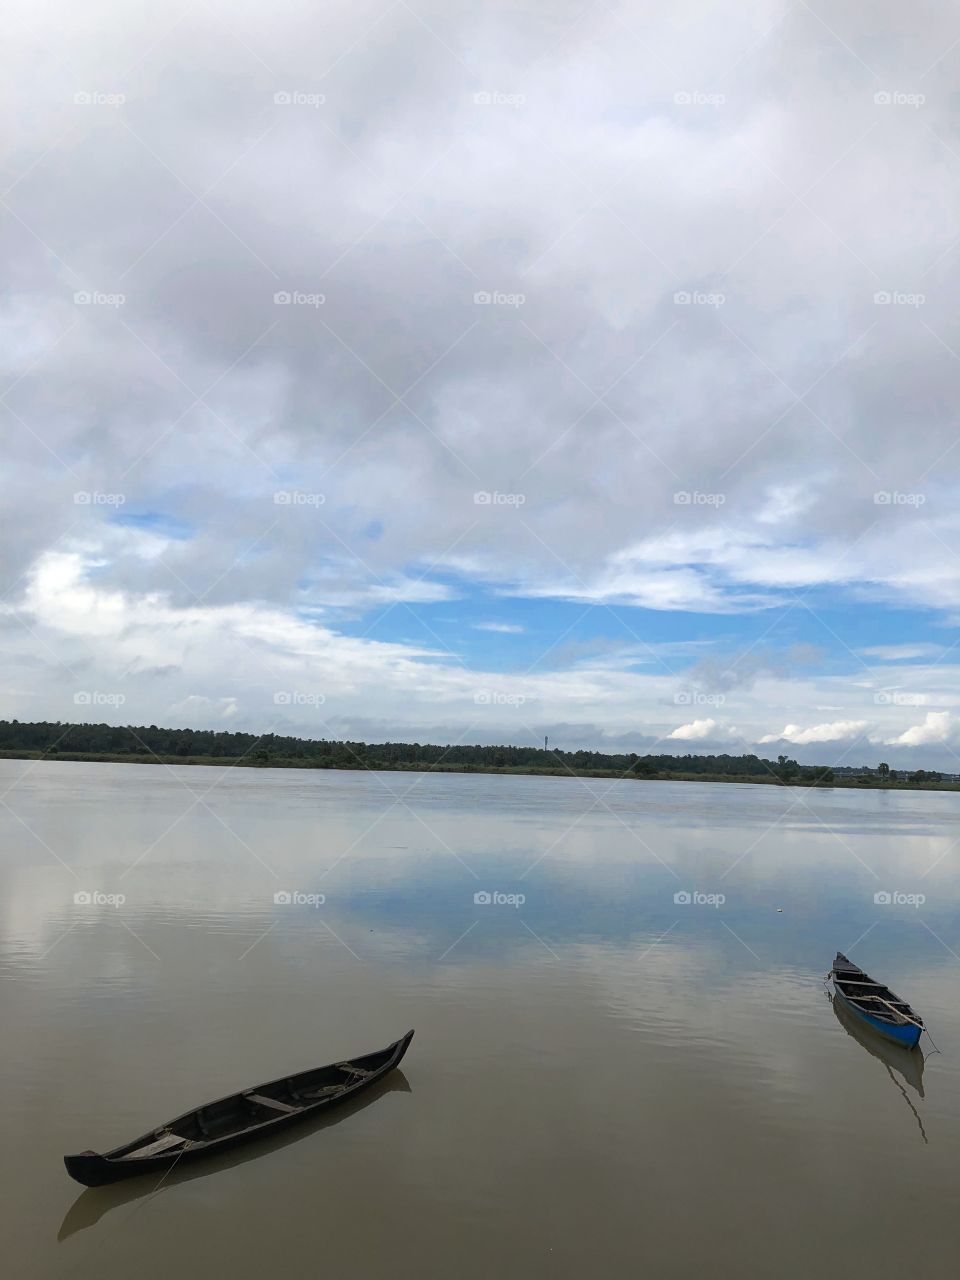 Beauty of kerala lakes under the blue sky